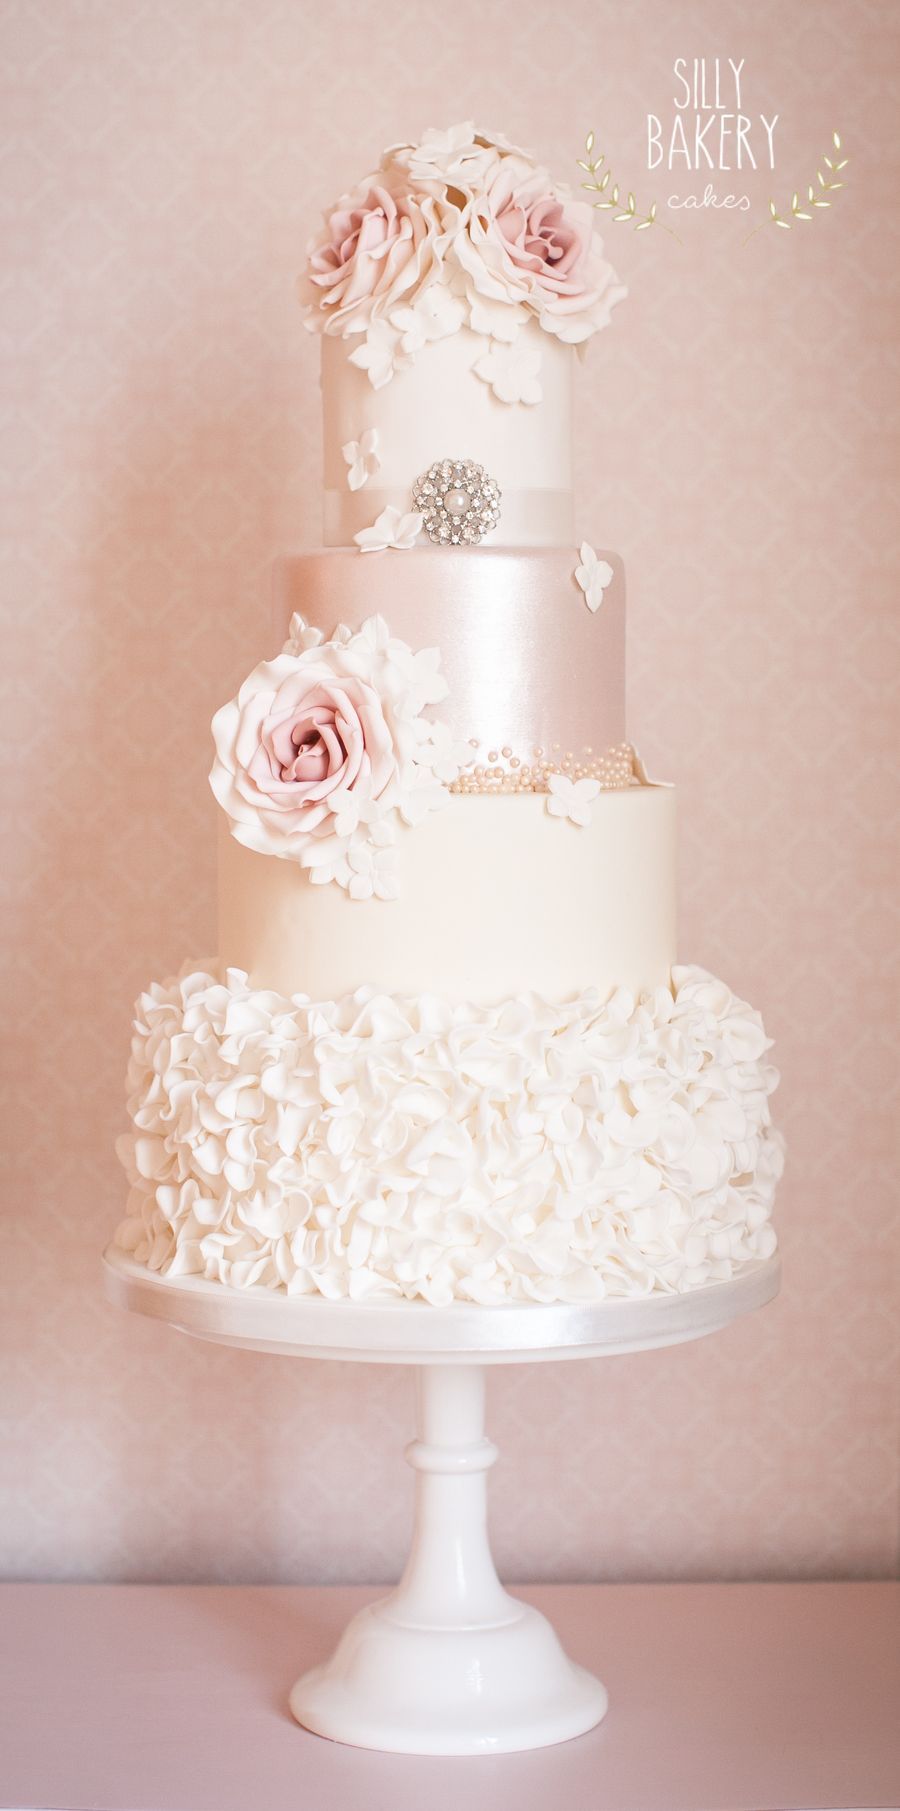 Satin, Roses and Paris Wedding Cake ~ all edible